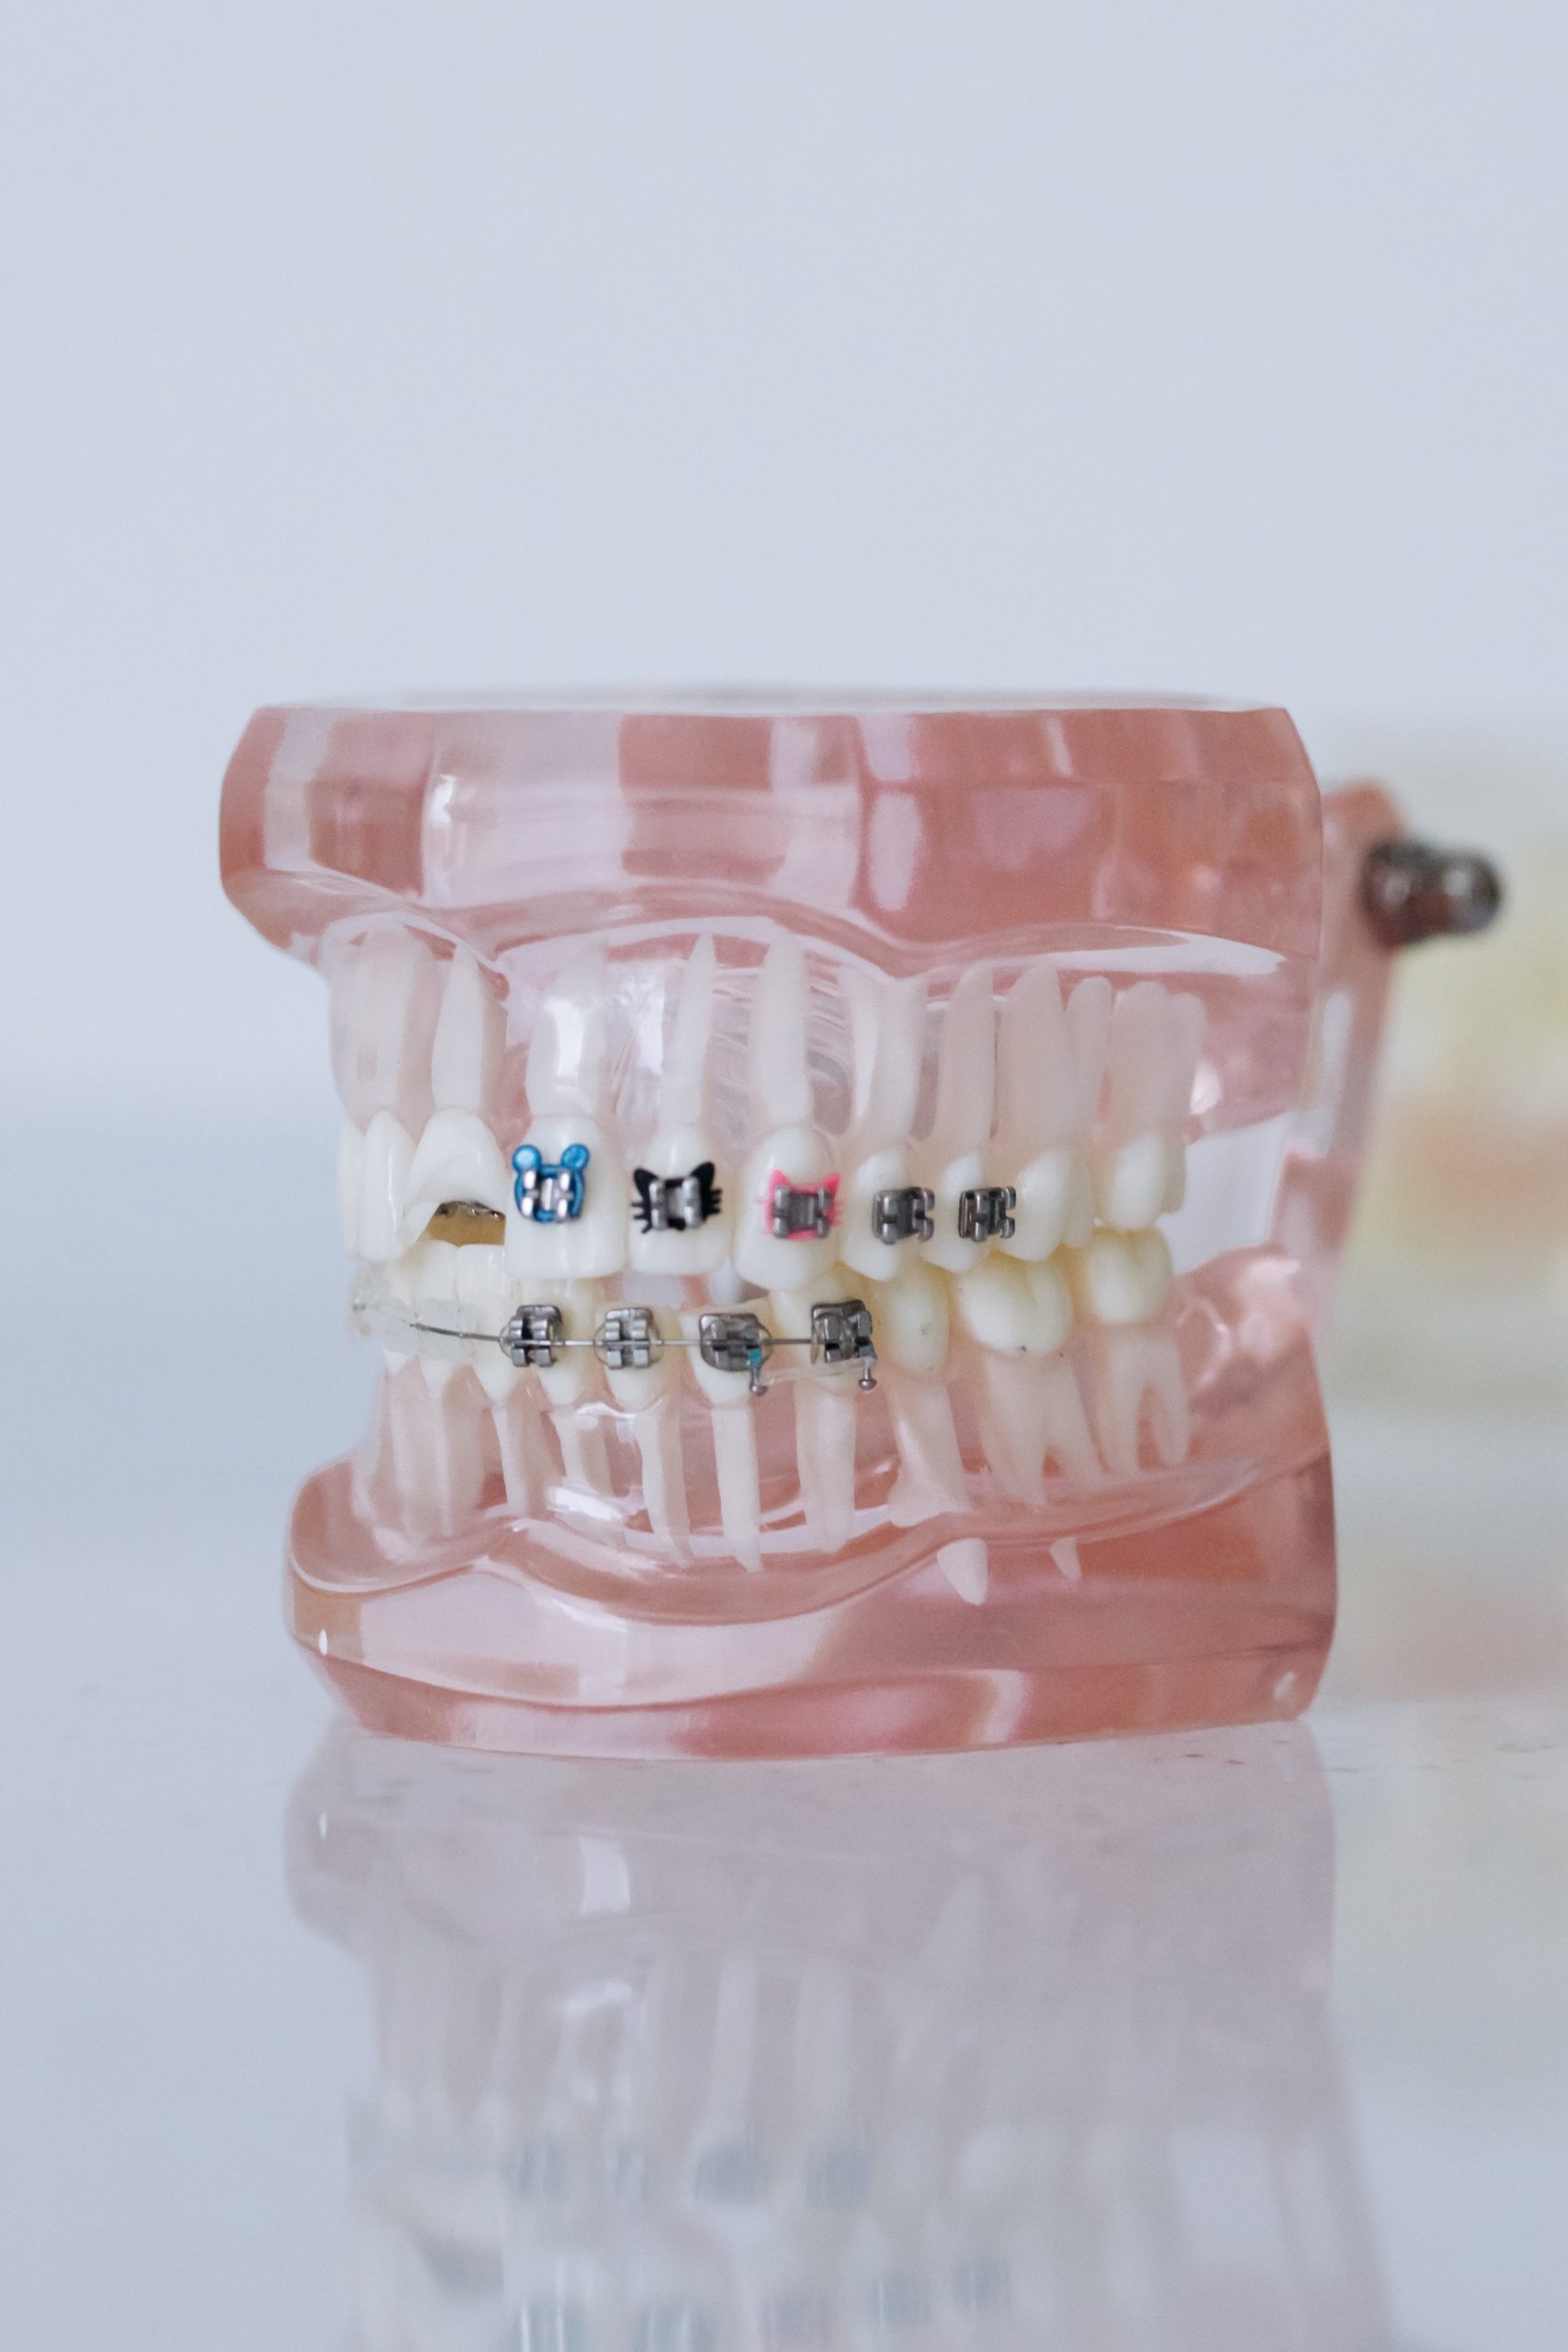 dental model with braces